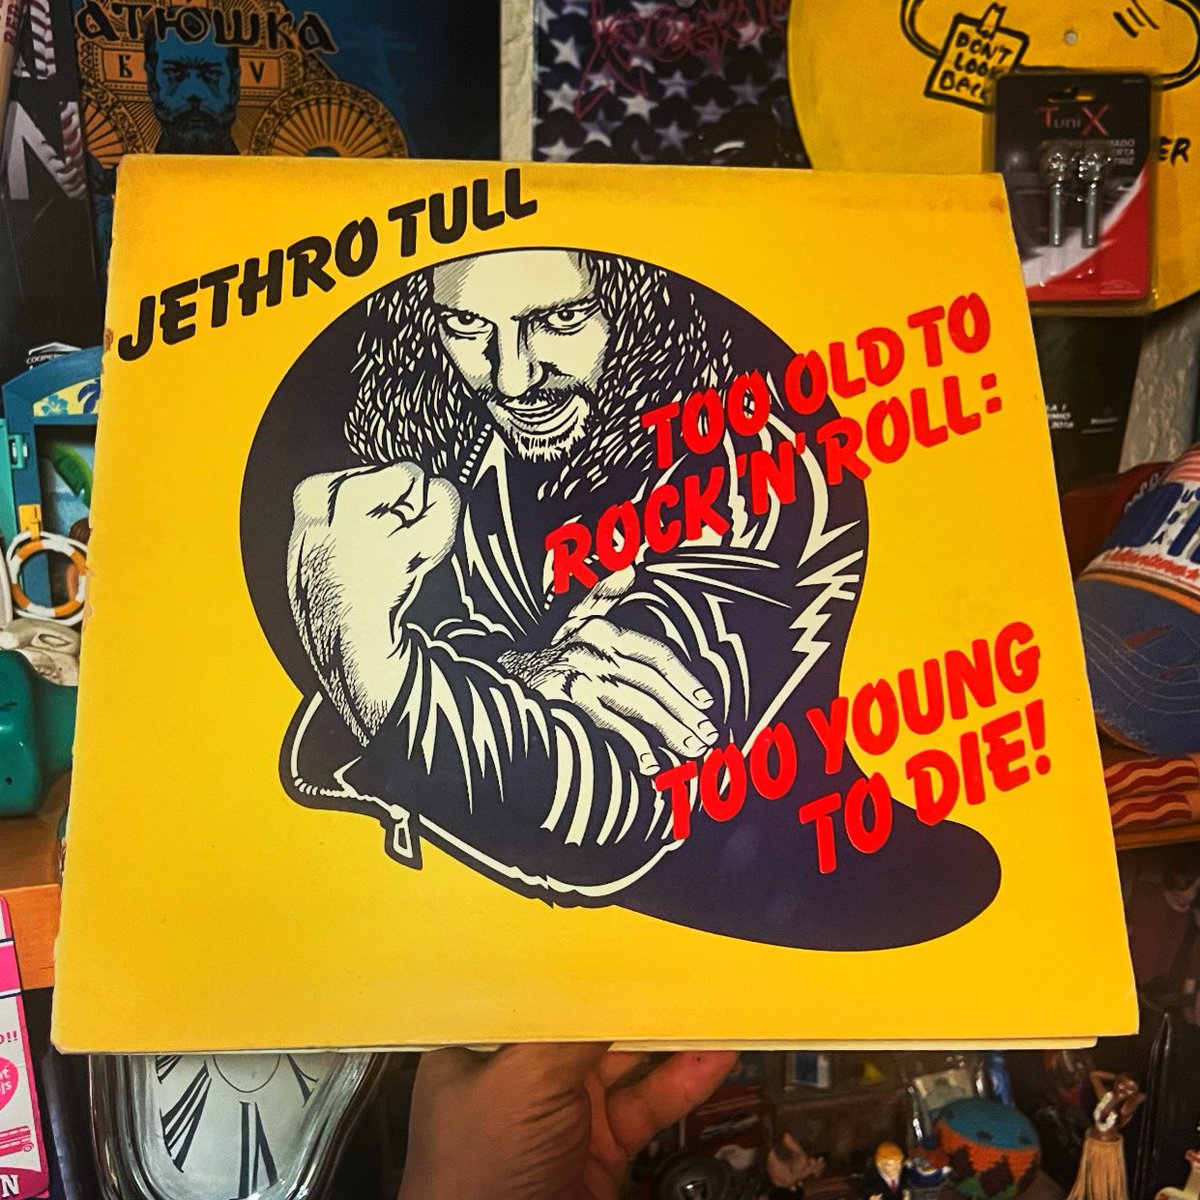 JETHRO TULL
Too Old to Rock ‘n’ Roll: Too Young to Die!
23.apr.1976
@jethrotull 
#jethrotull #toooldtorocknrolltooyoungtodie